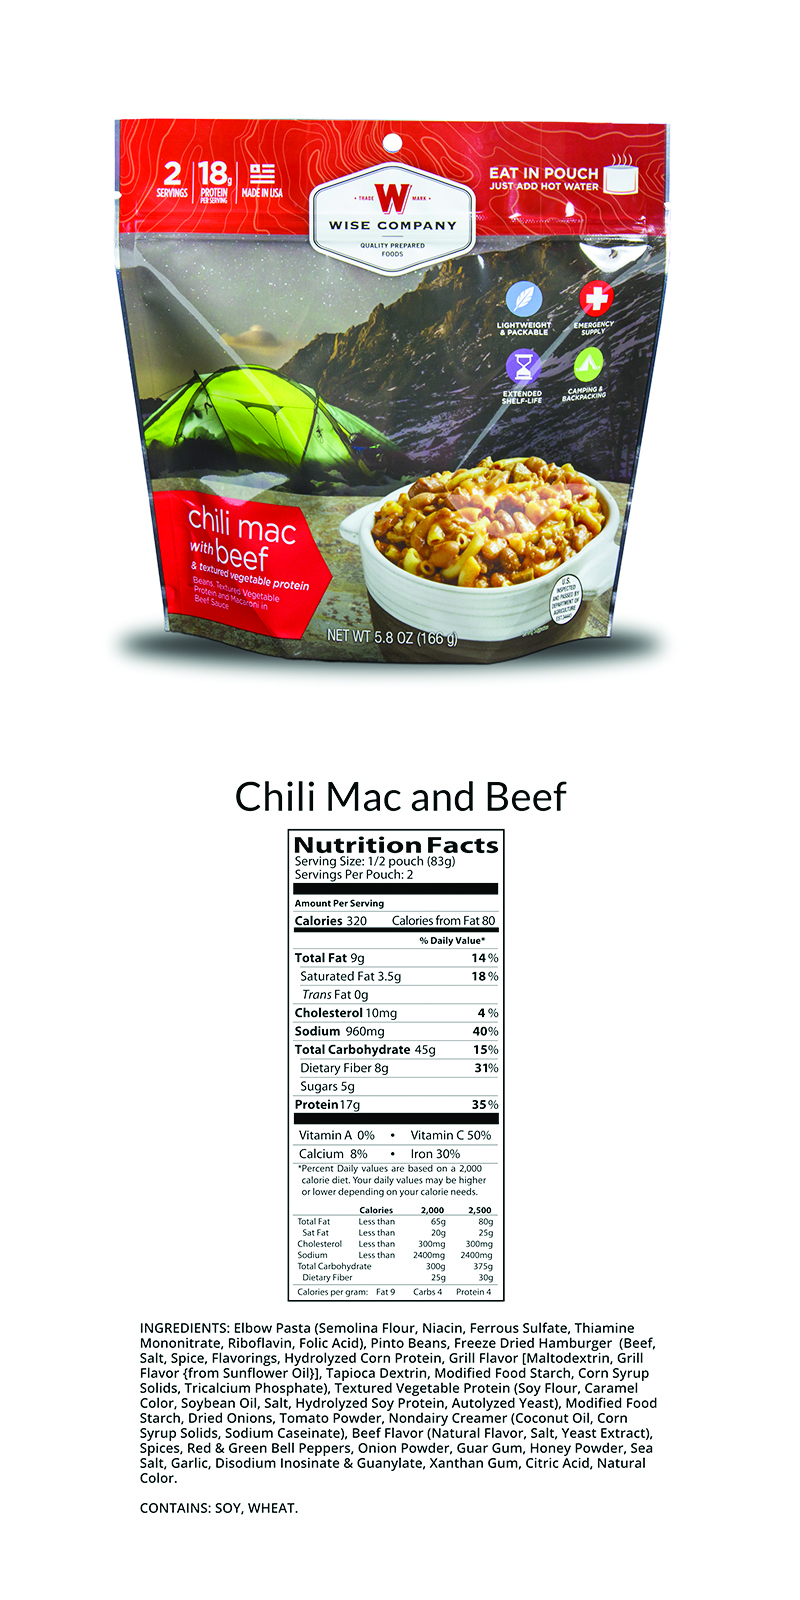 Chili Mac and Beef